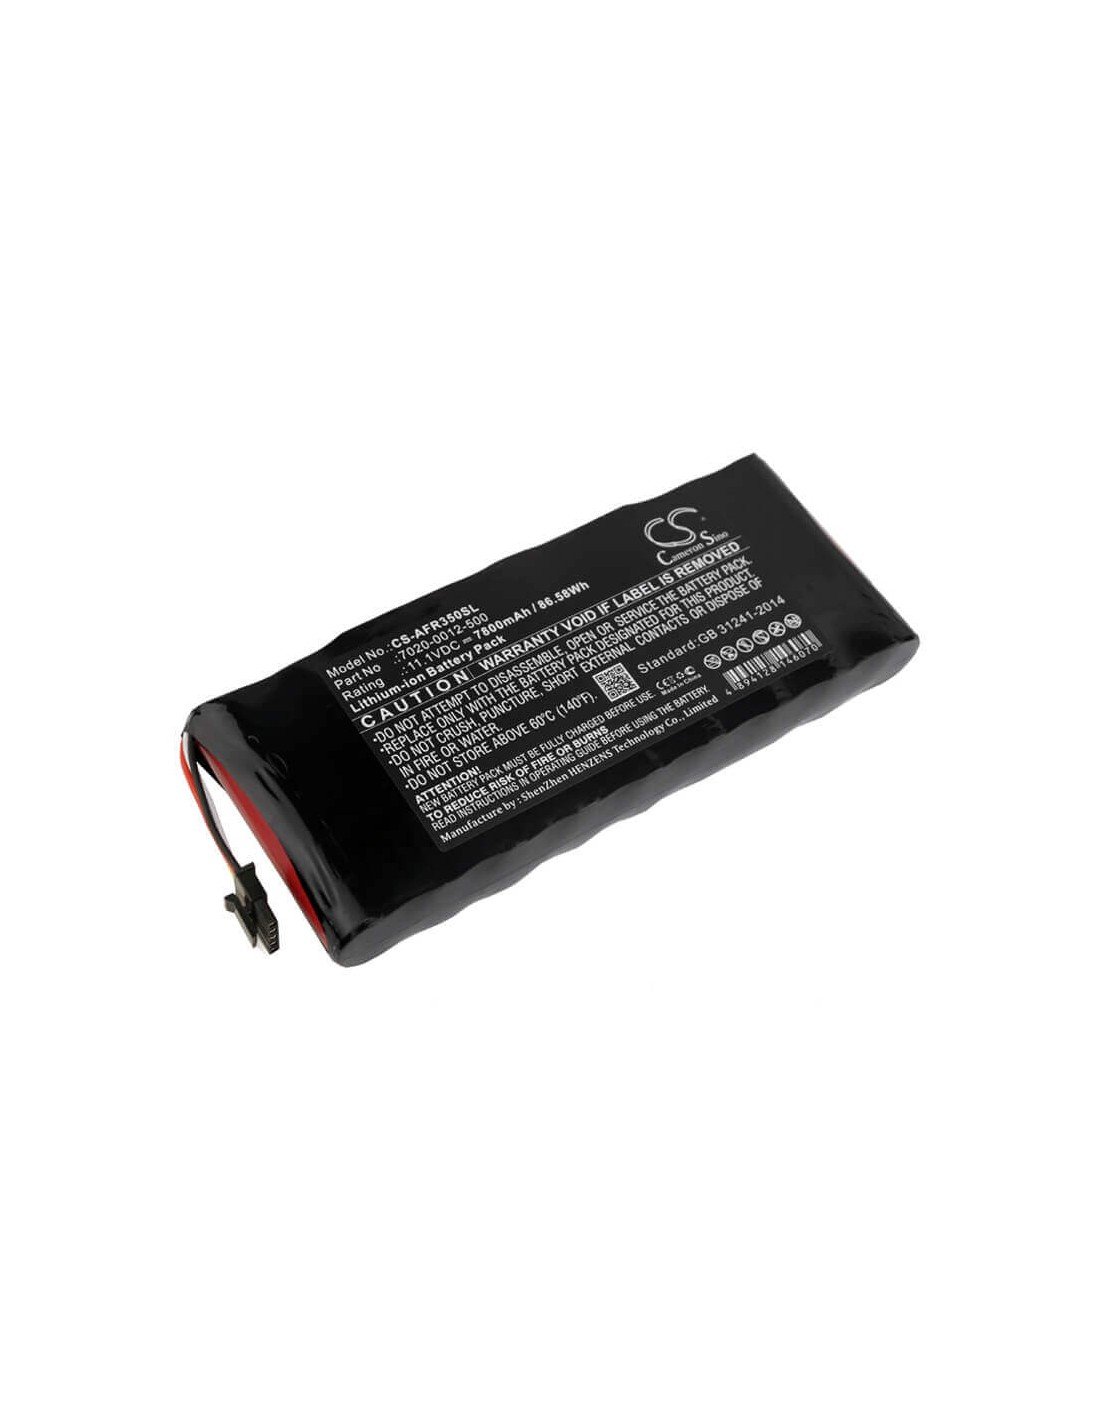 Battery for Aeroflex, 3500a, Cobham Avcomm 8800s 11.1V, 7800mAh - 86.58Wh